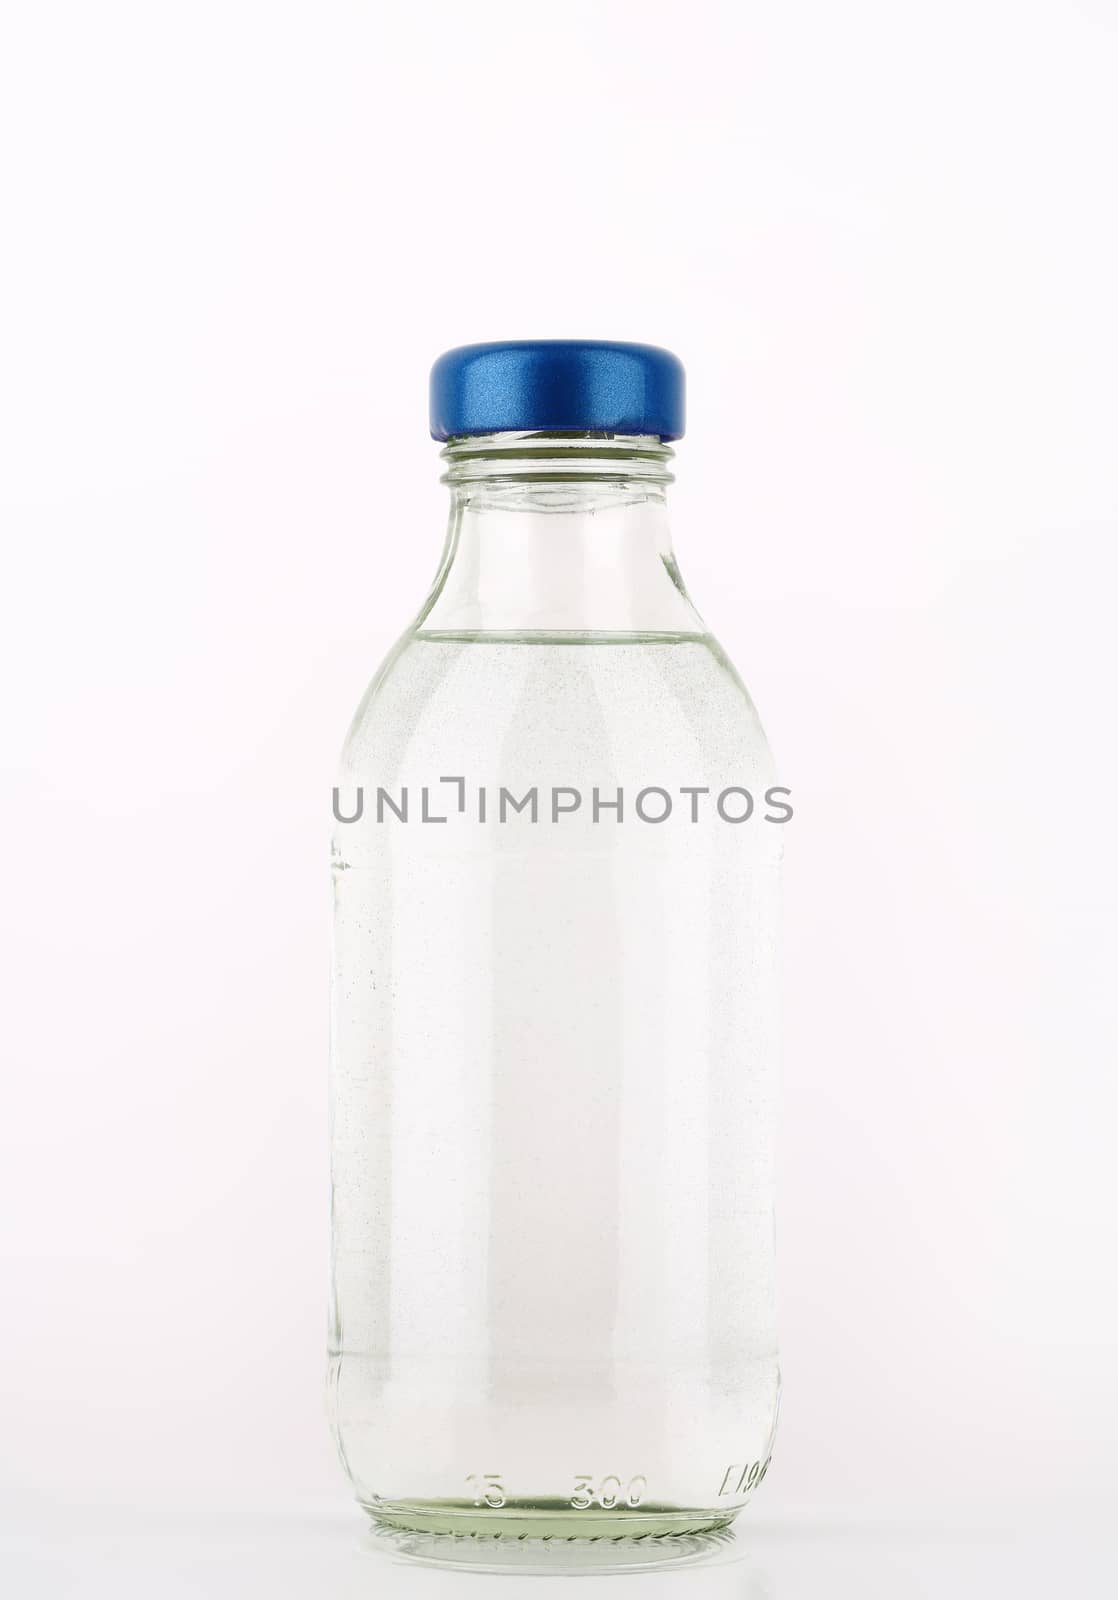 bottle of fresh water on white background